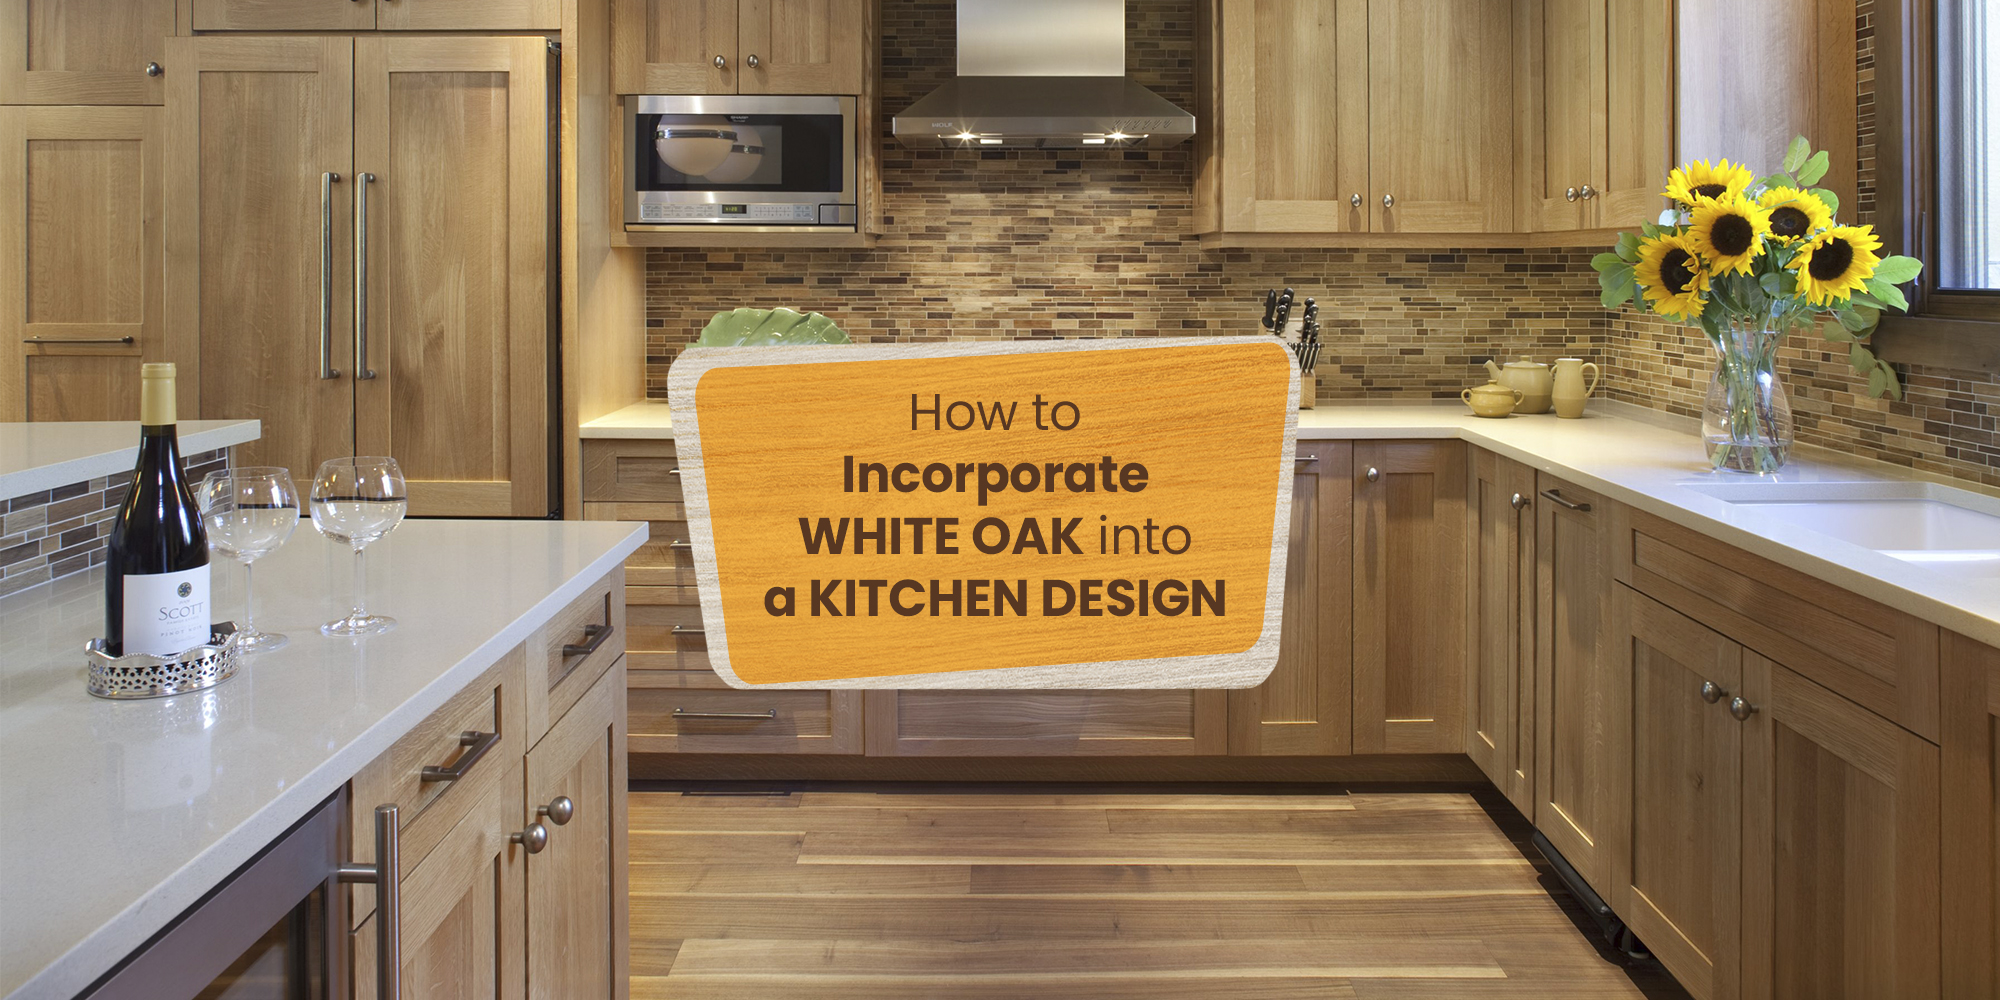 How to Incorporate White Oak into a Kitchen Design